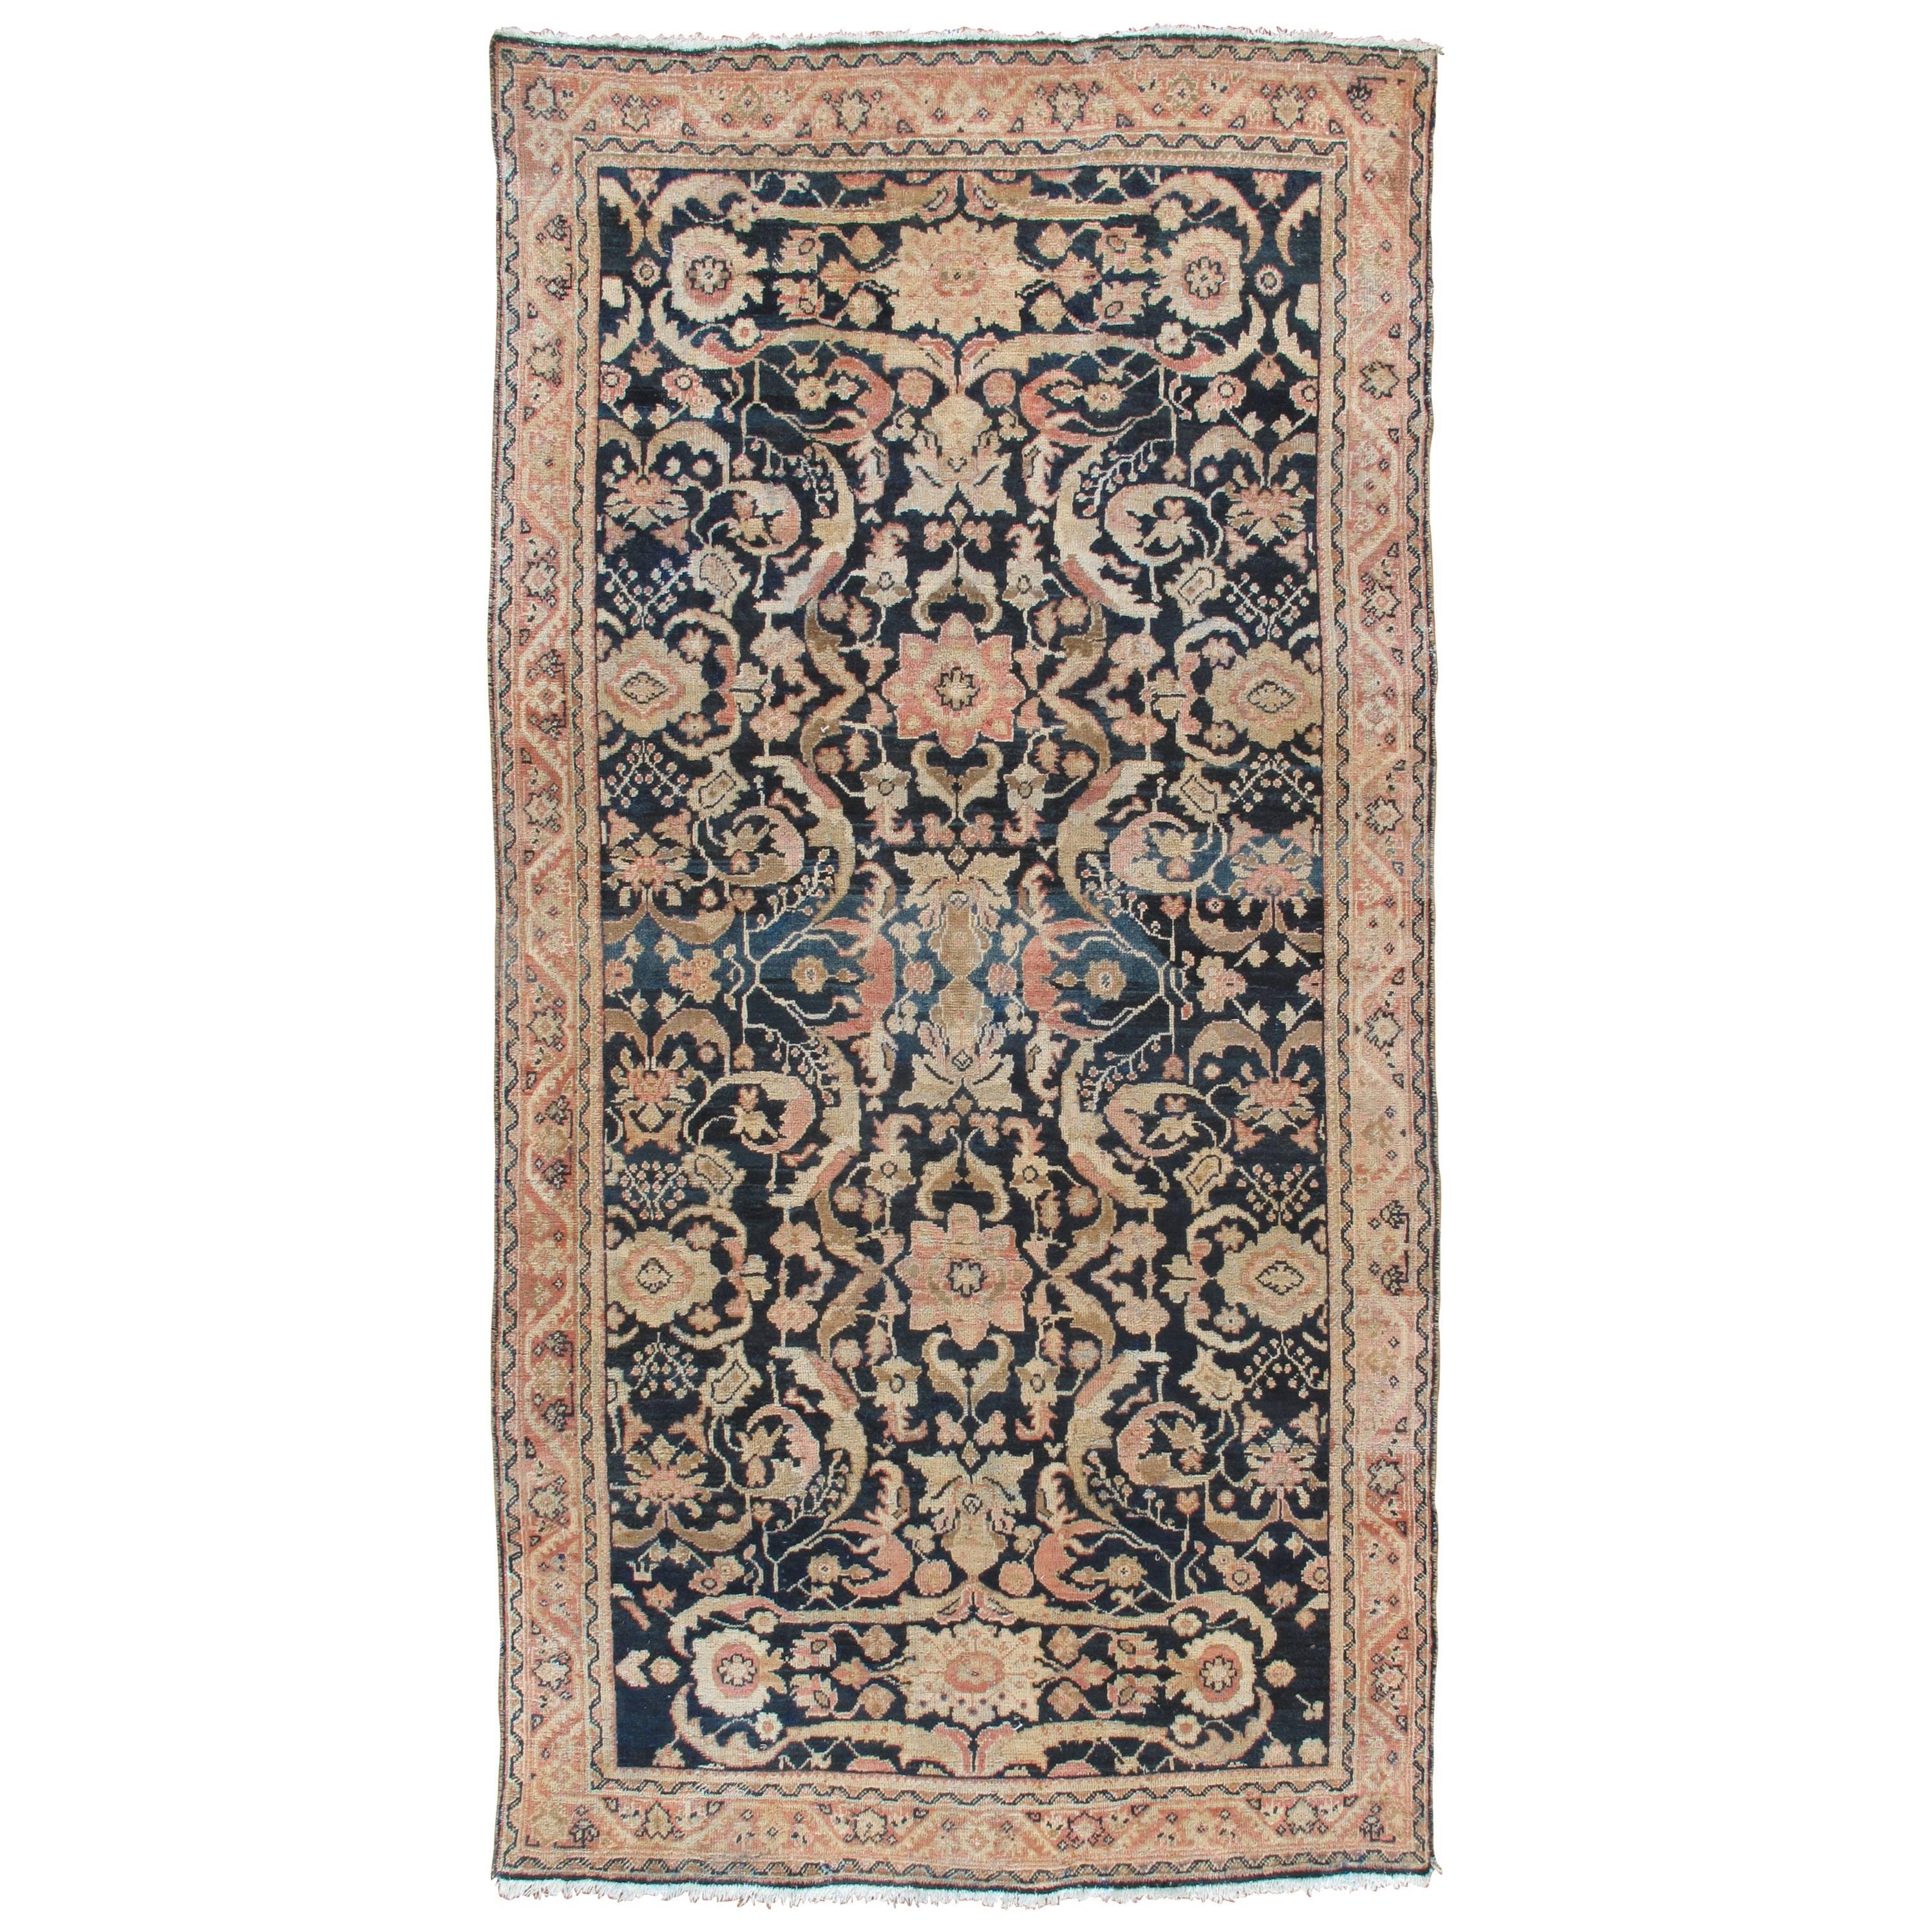 Antique Persian Sultanabad Rug, Handmade Wool Oriental Rug, Navy Blue